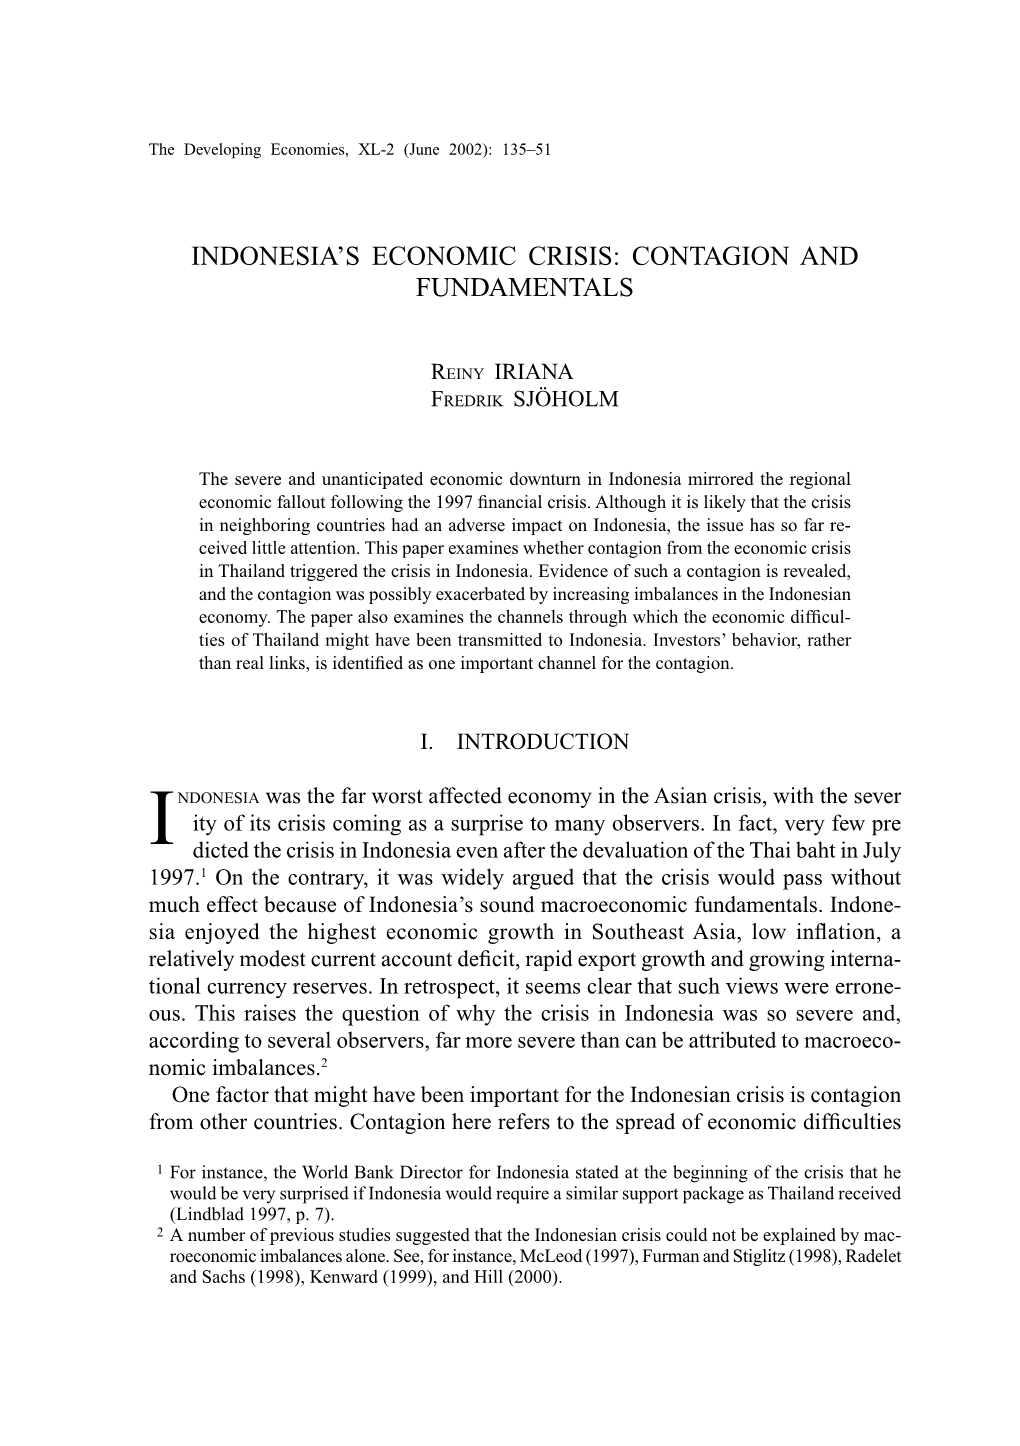 Indonesia's Economic Crisis: Contagion and Fundamentals